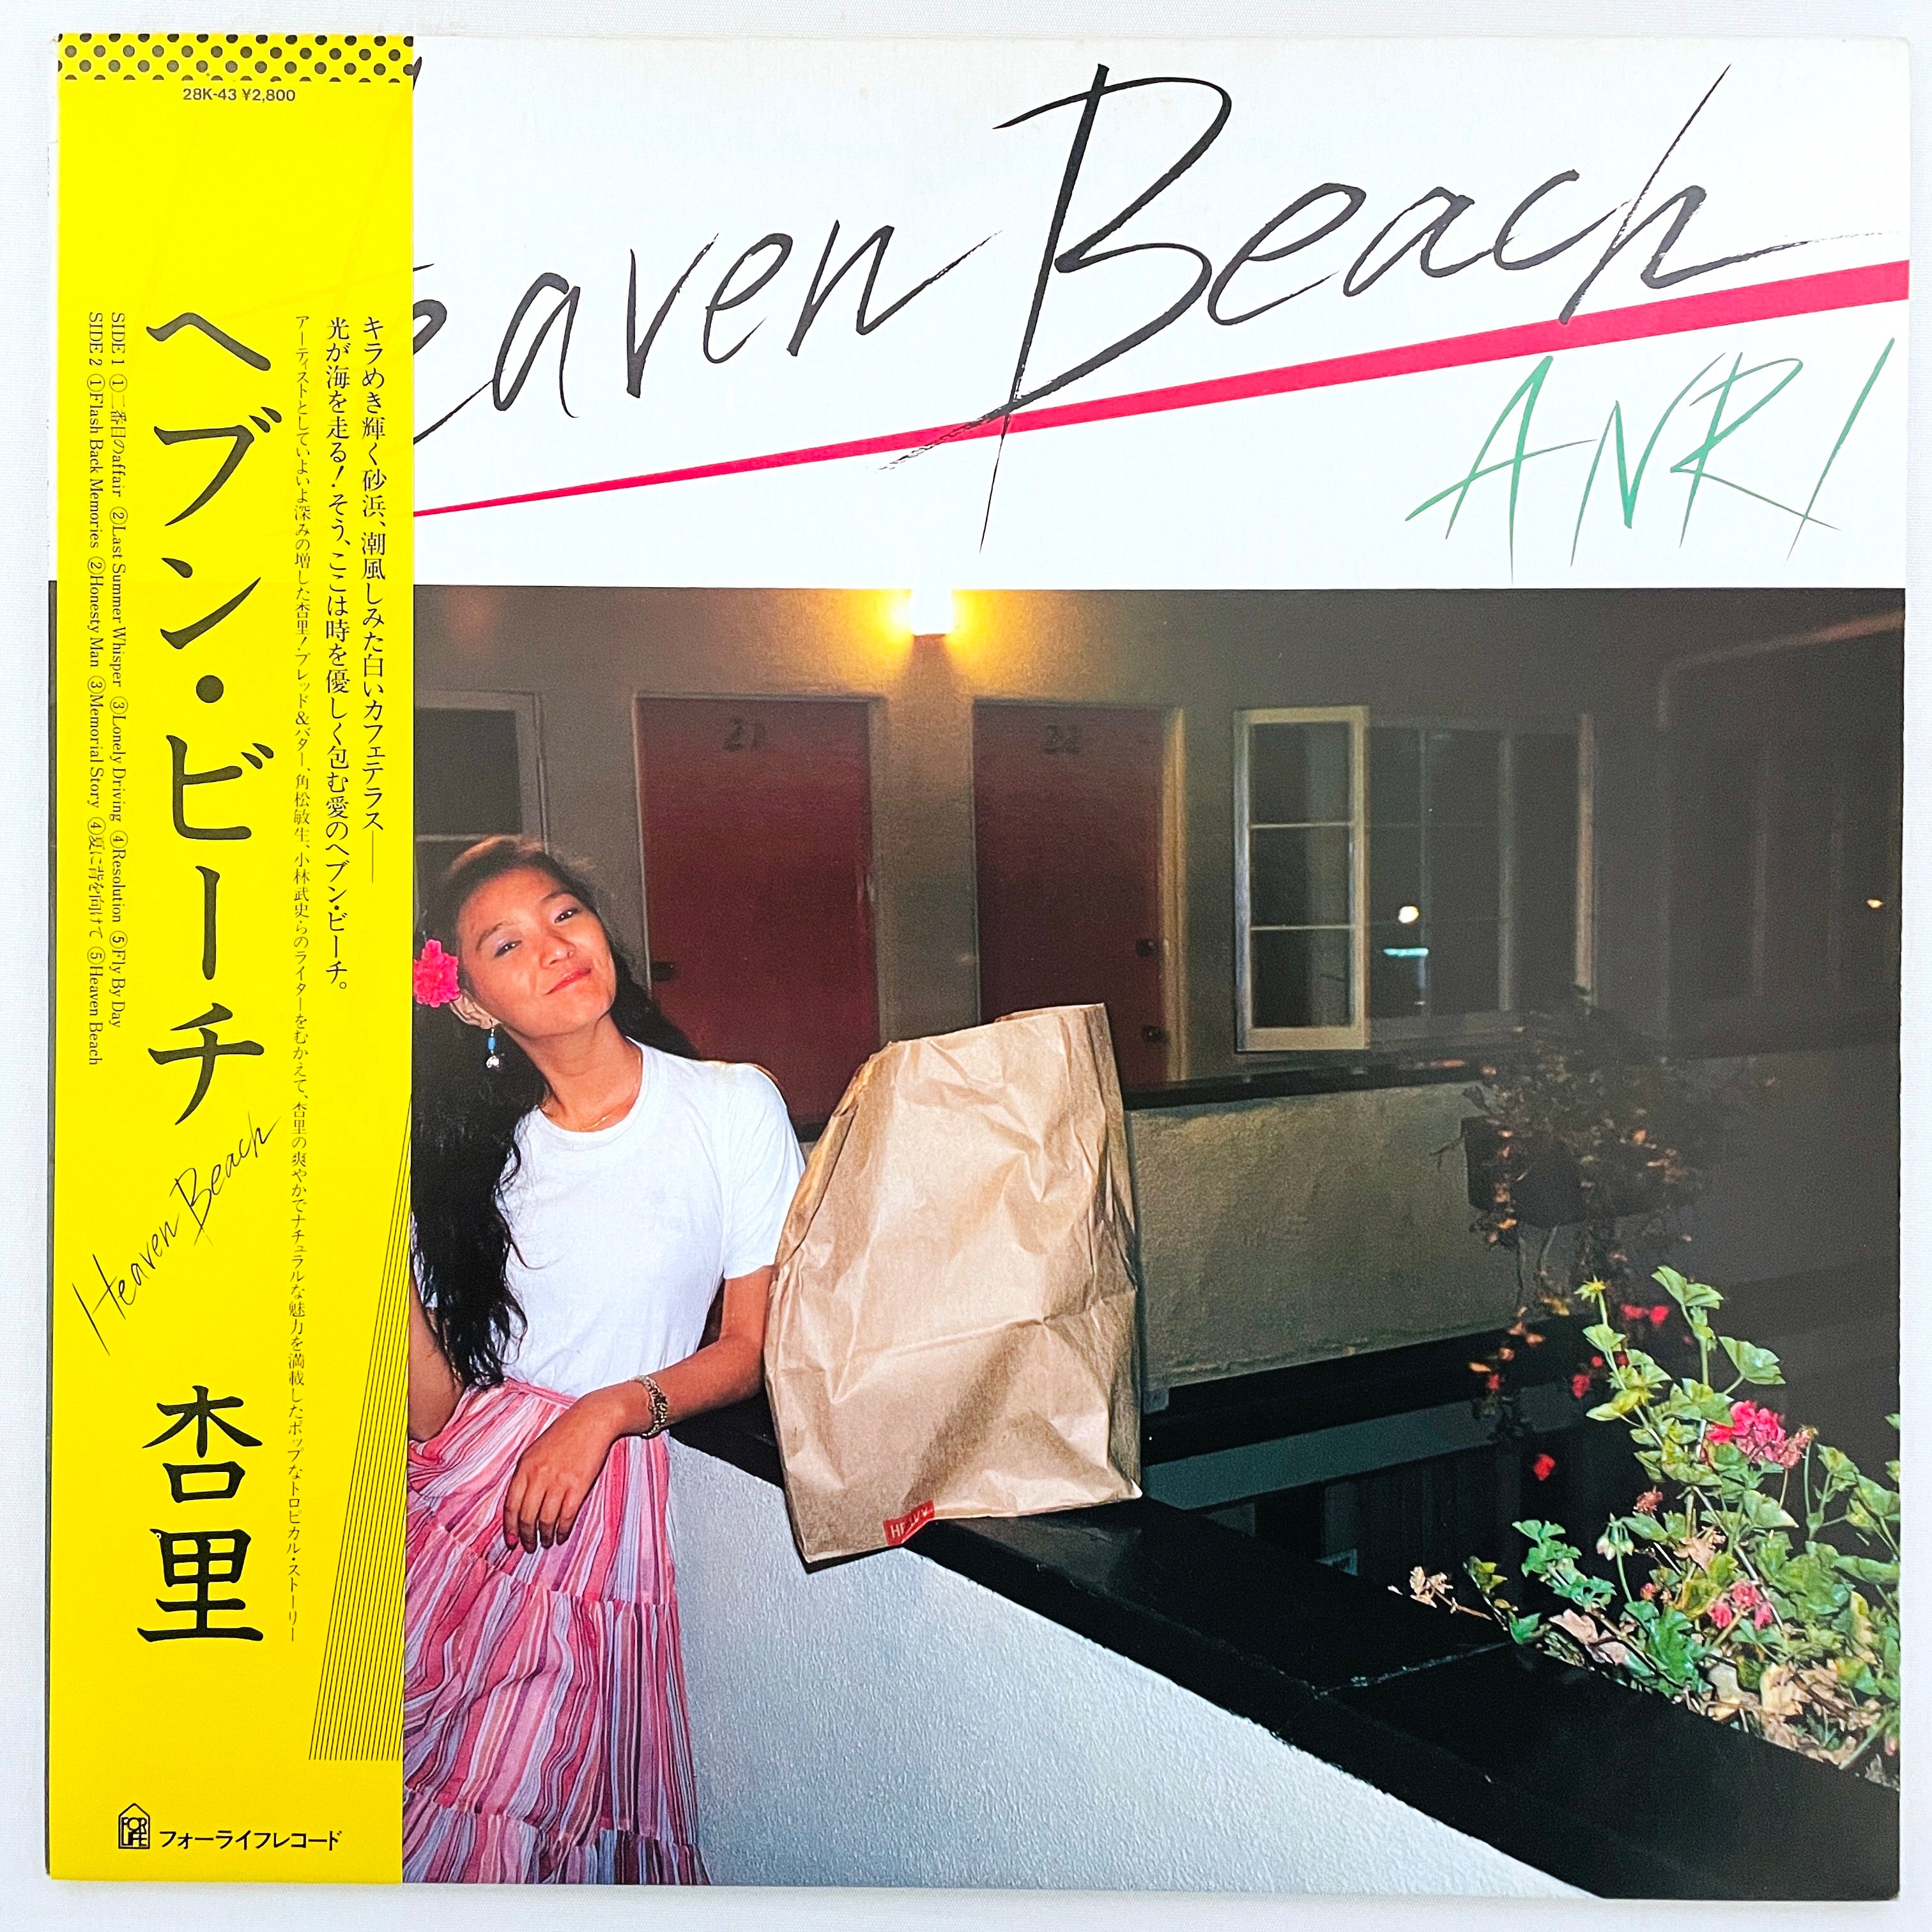 Anri Heaven Beach 28K-43 ORG – Portal Records